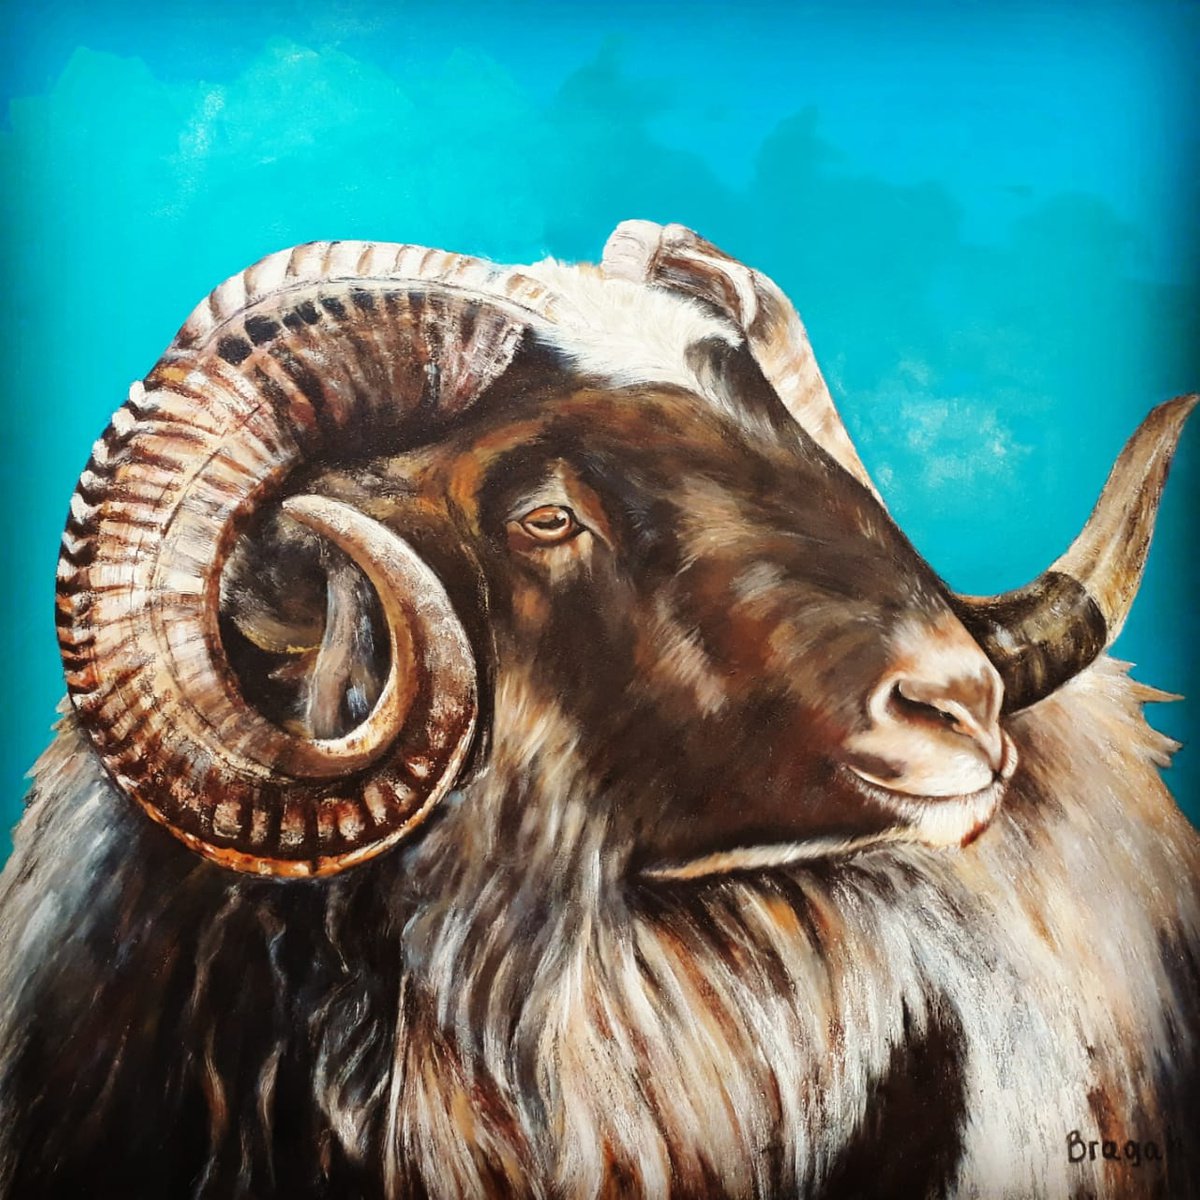 Jacob’s Sheep by Geraldo Braga